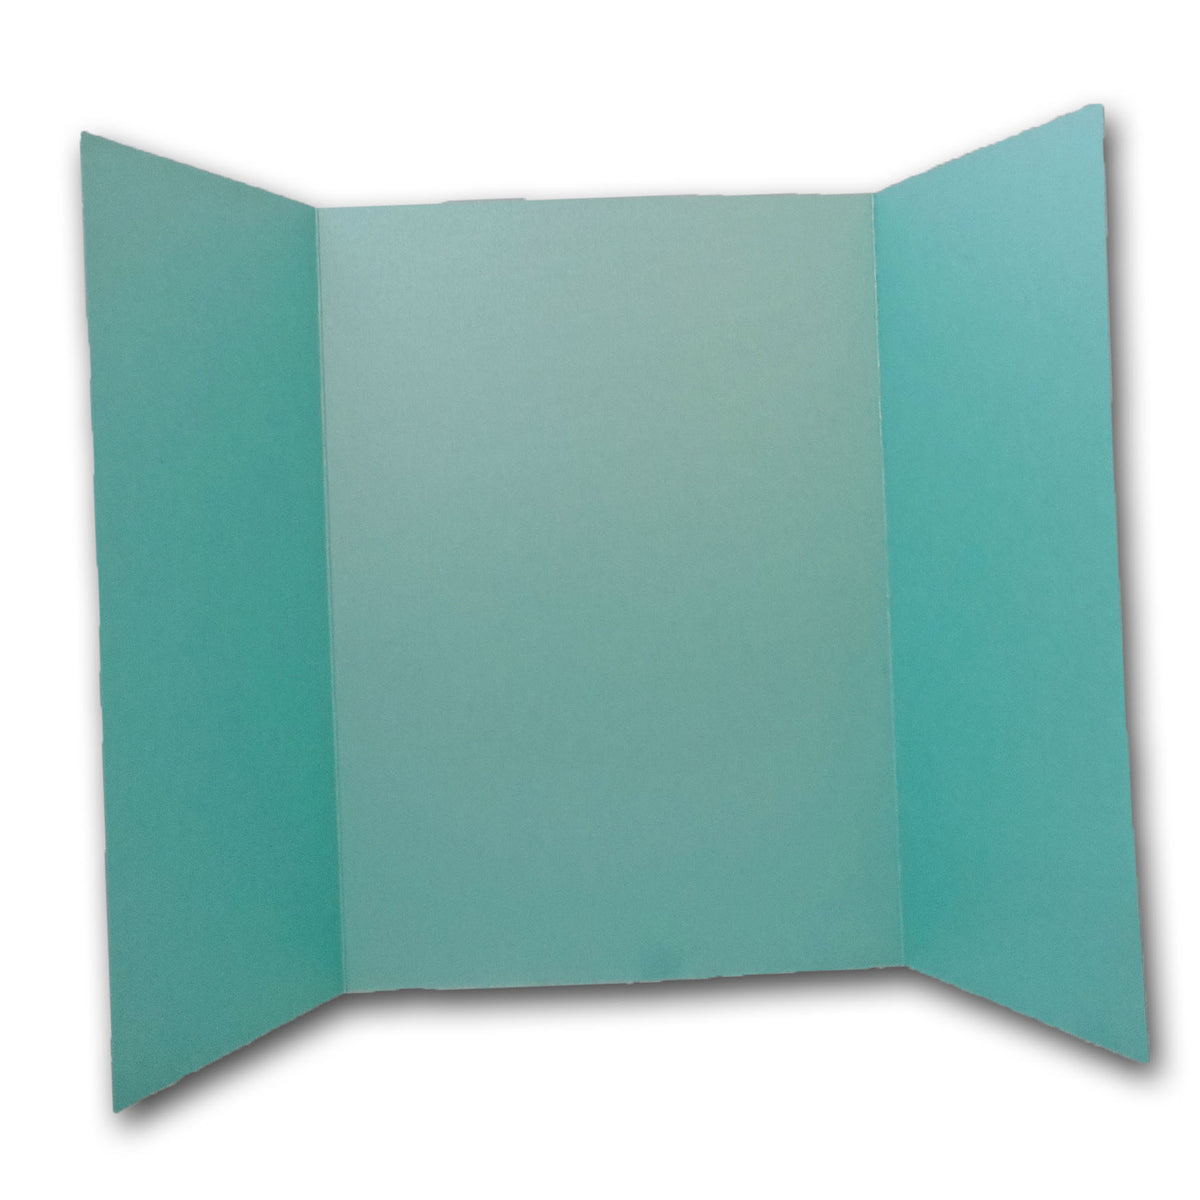 Shimmery Blue Green Aqua 5x7 Gatefold Discount Card Stock DIY Invitations